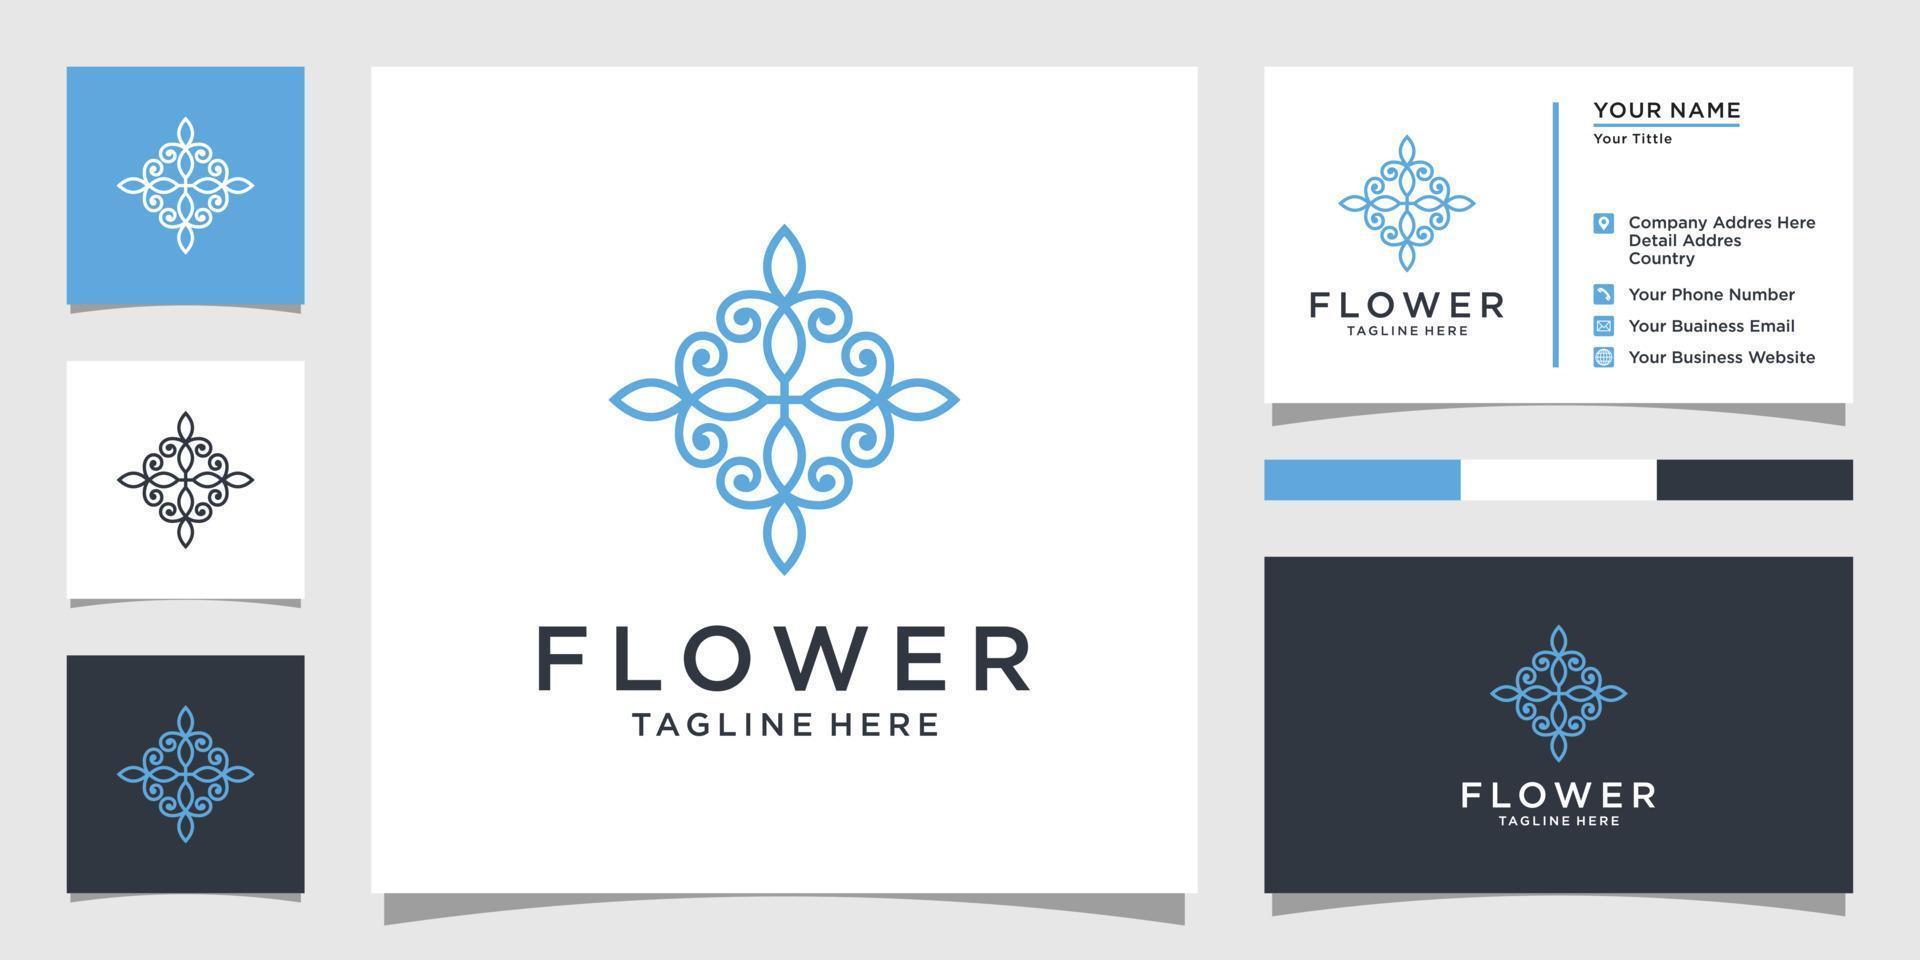 Flower logo vector design template with business card design.